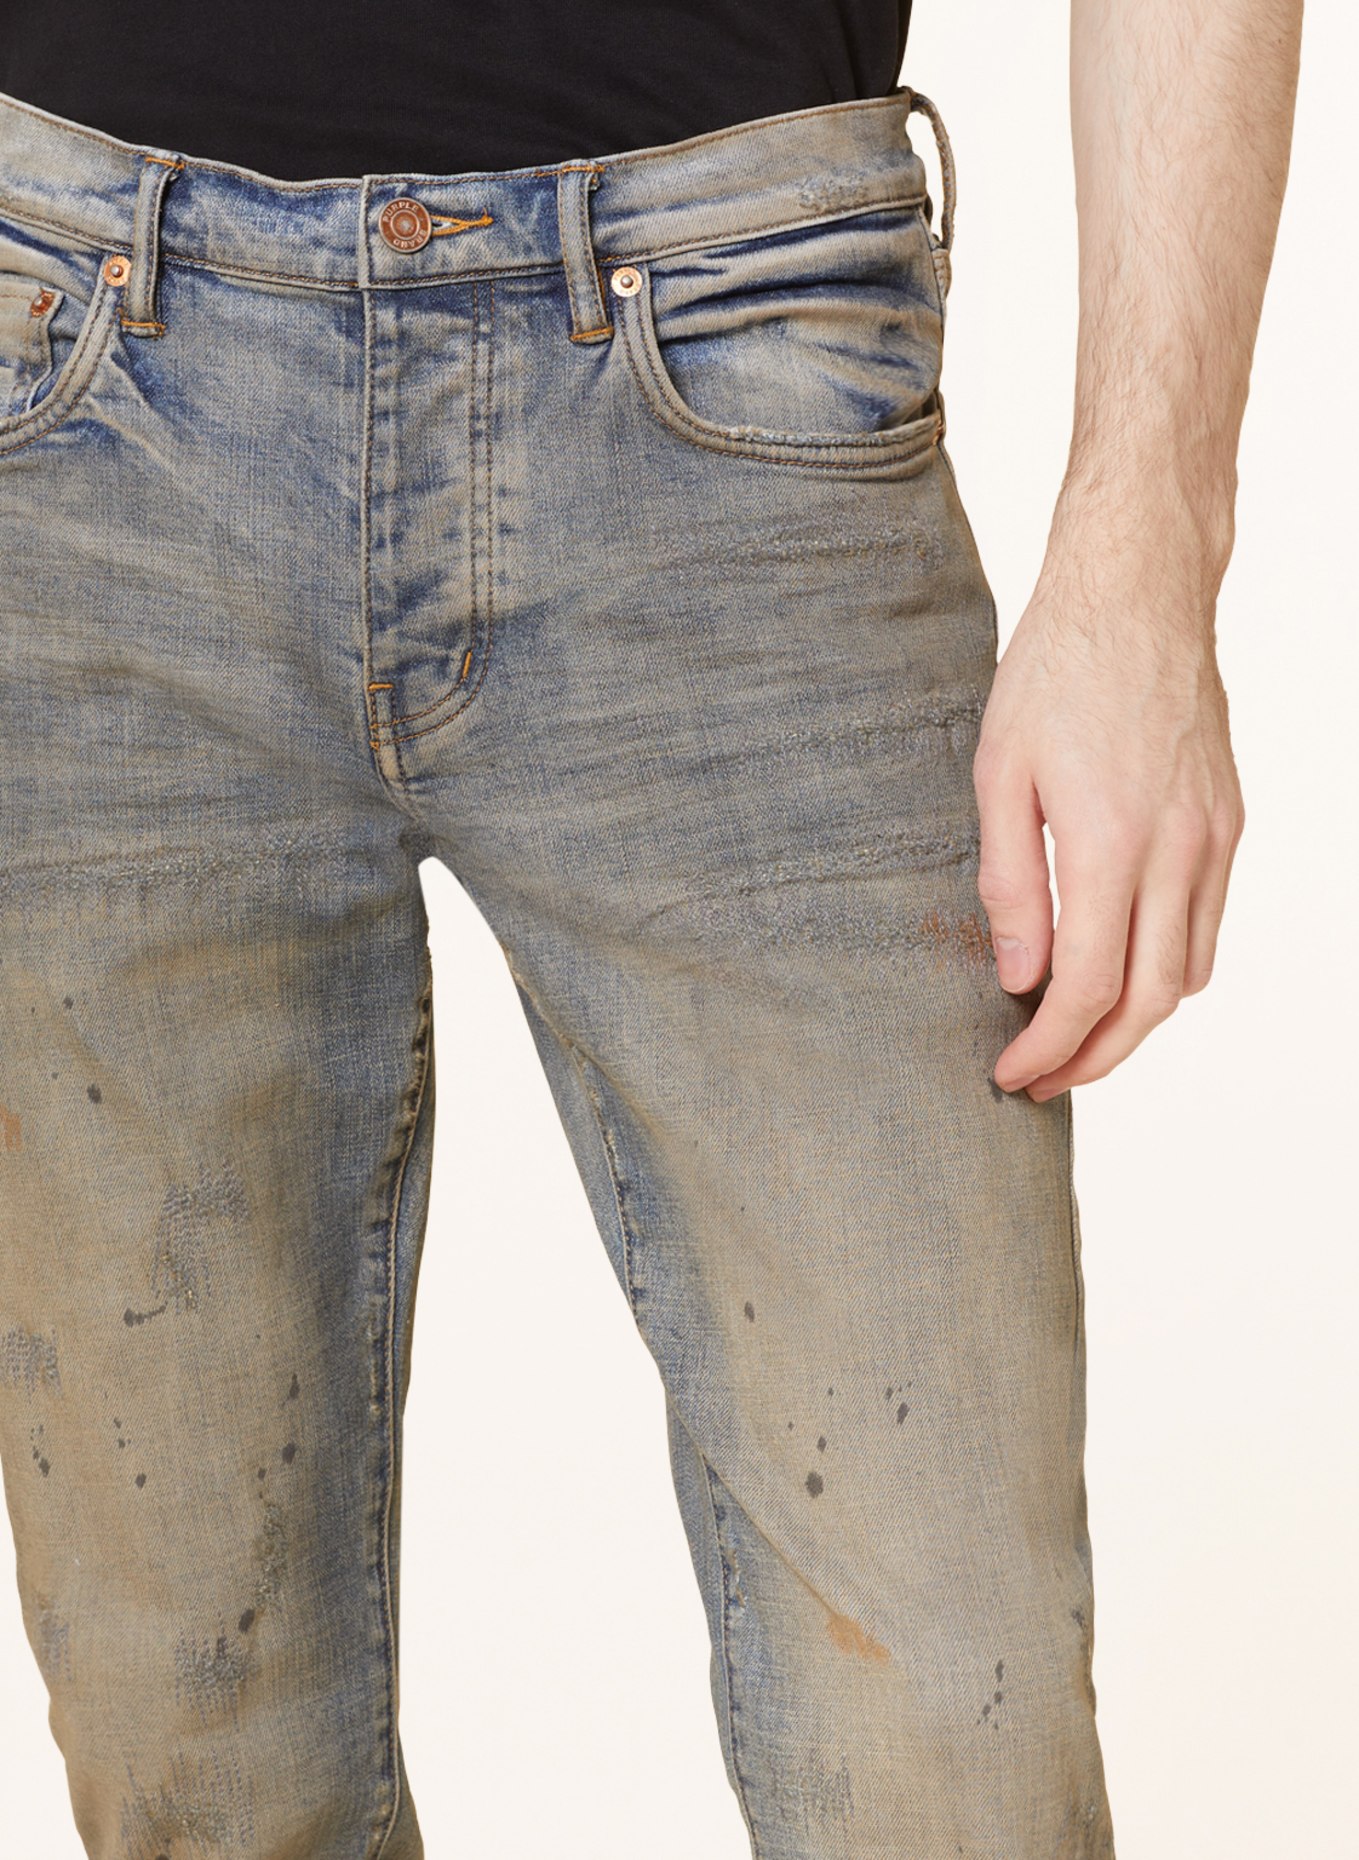 PURPLE BRAND Destroyed jeans extra slim fit in ior indigo oil repair